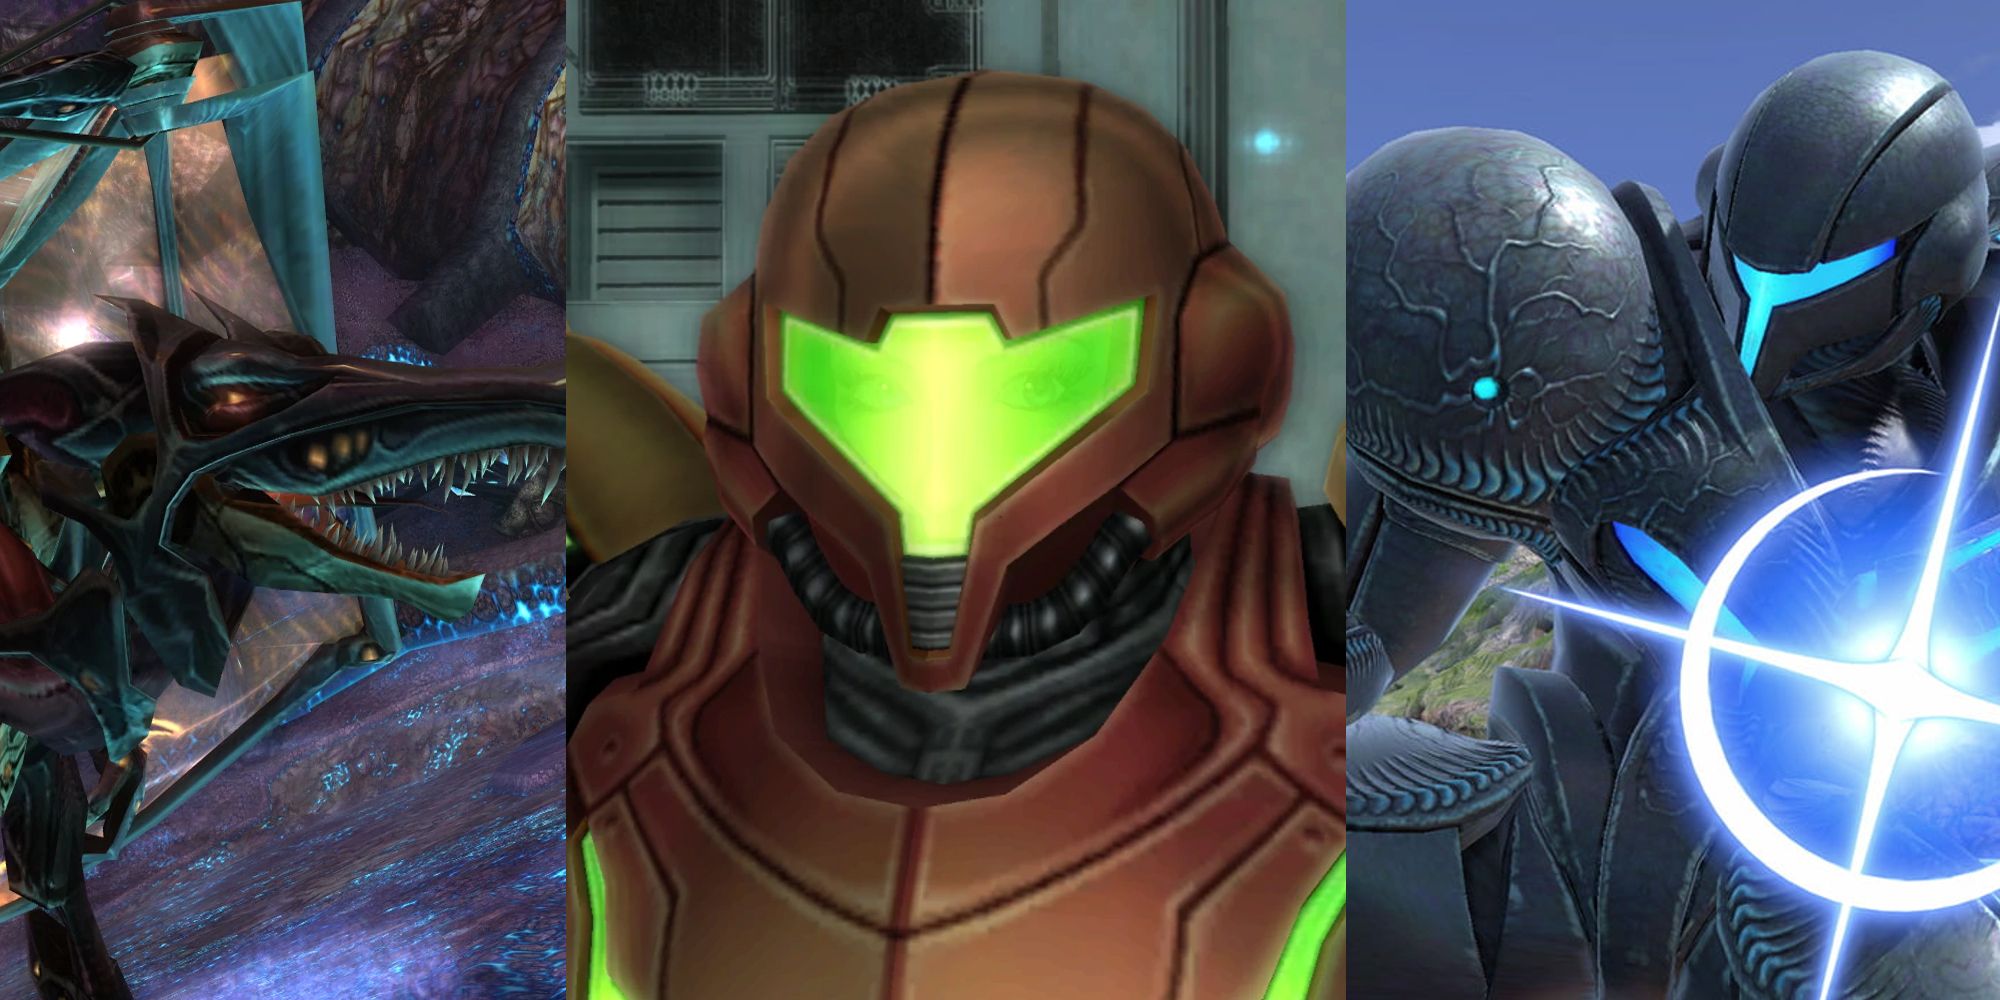 Omega Ridley in Metroid Prime 3: Corruption; Samus wearing her Power Suit in Metroid Prime; Dark Samus charging its cannon in Super Smash Bros Ultimate